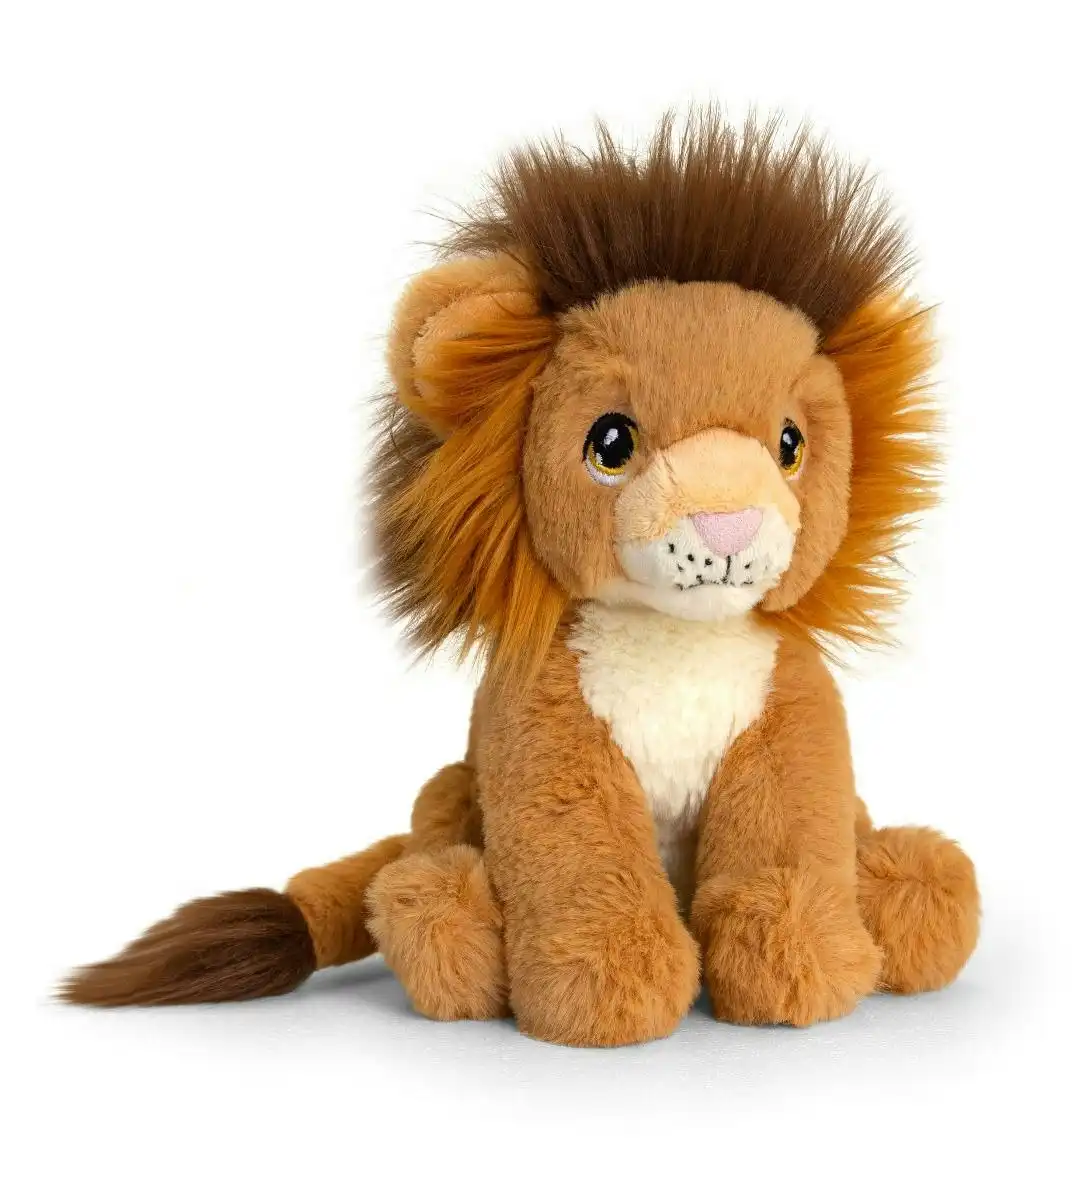 Keeleco 18cm Lion Kids/Children/Toddler Animal Soft Plush Stuffed Toy Brown 3y+